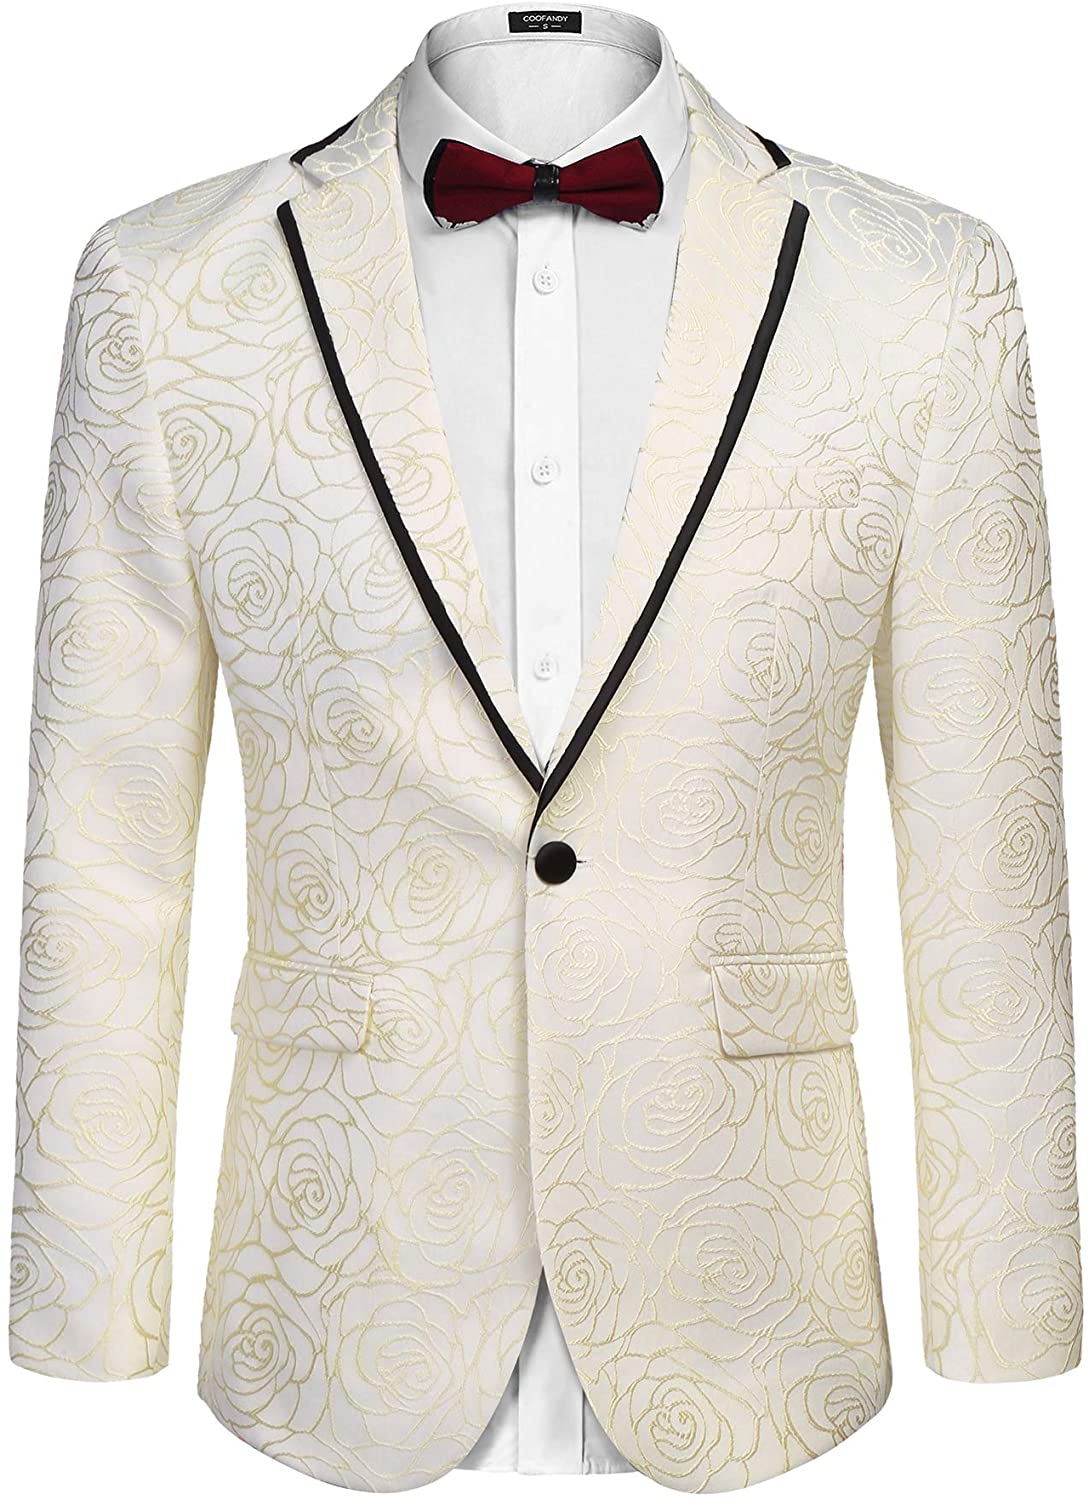 COOFANDY Men's Floral Tuxedo Jacket Rose Embroidered Suit Jacket Wedding Prom Dinner Party Blazer 